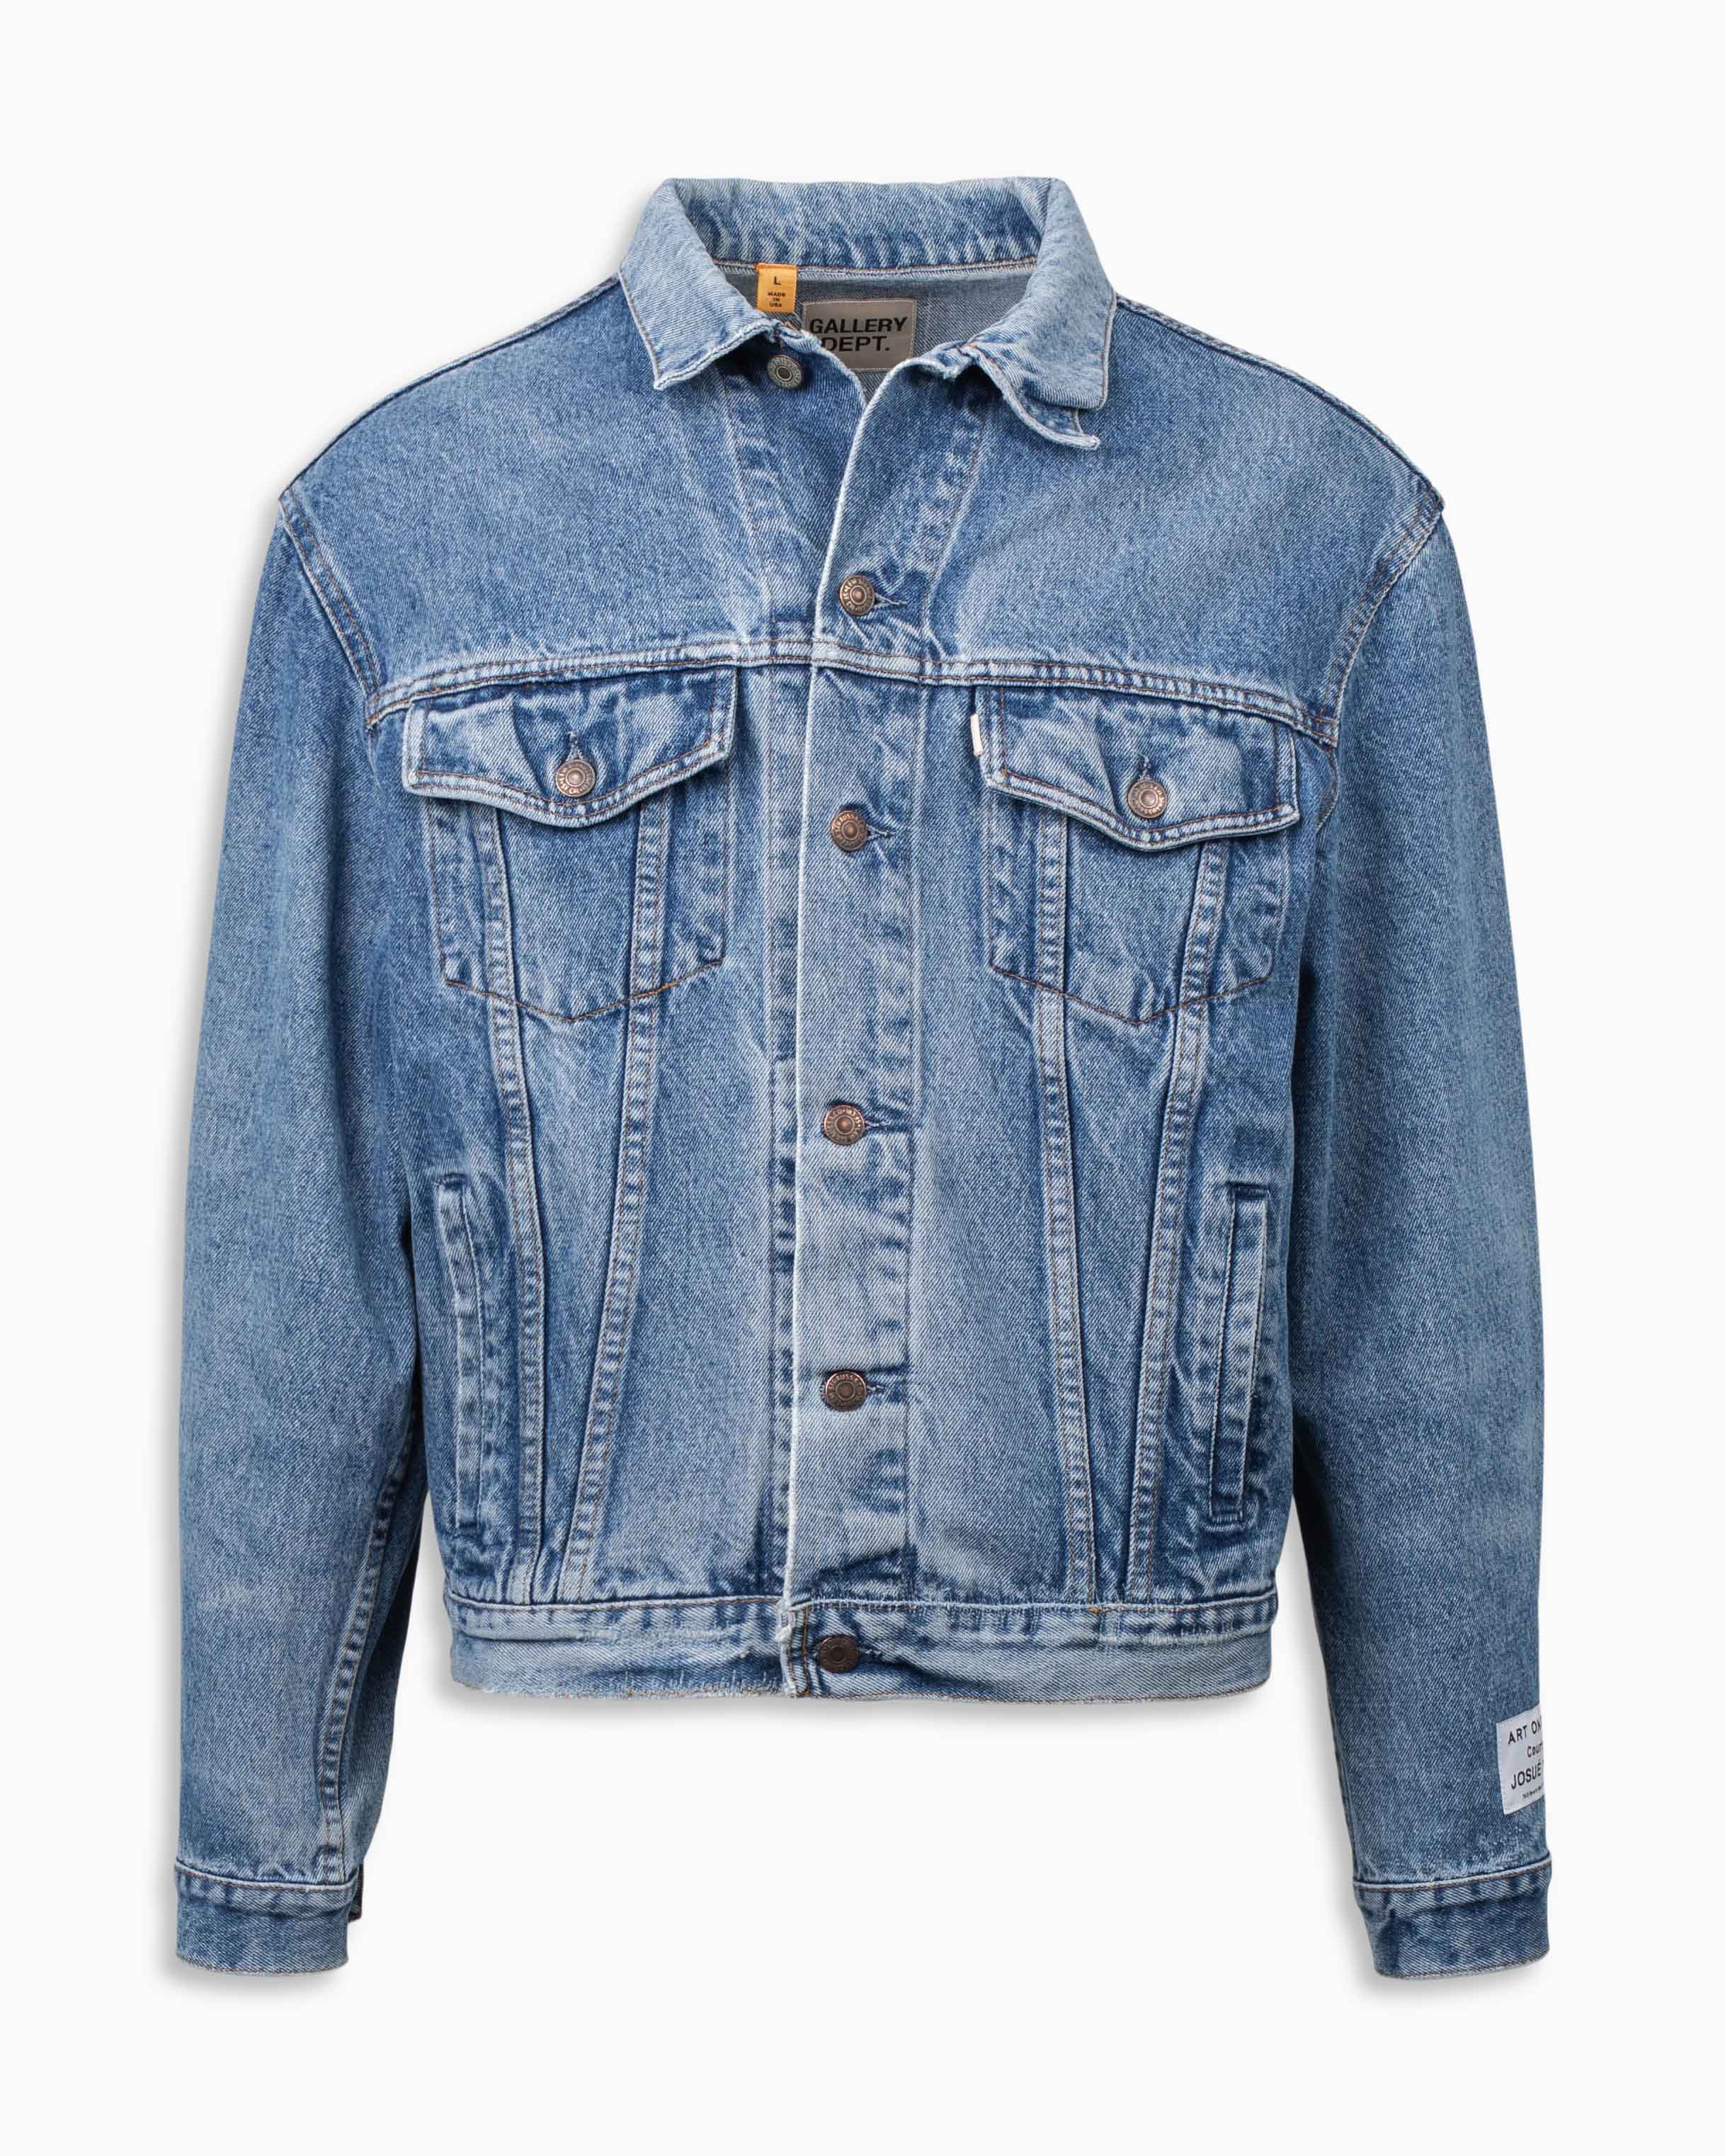 Vintage Andy Denim Jacket GALLERY DEPT. Outerwear Denim Jackets Blue